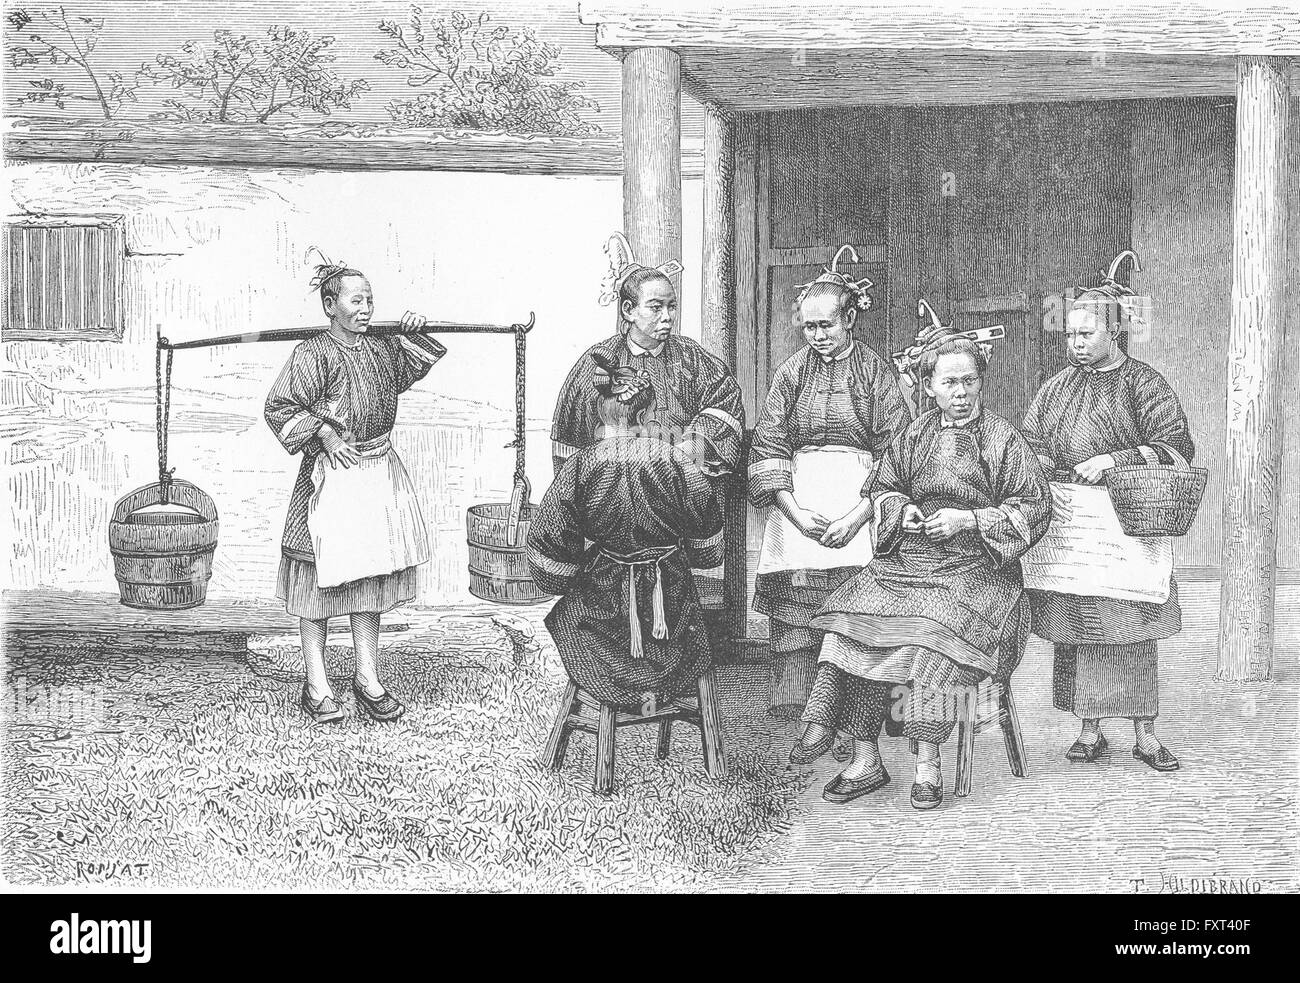 Female fujian province Black and White Stock Photos & Images - Alamy